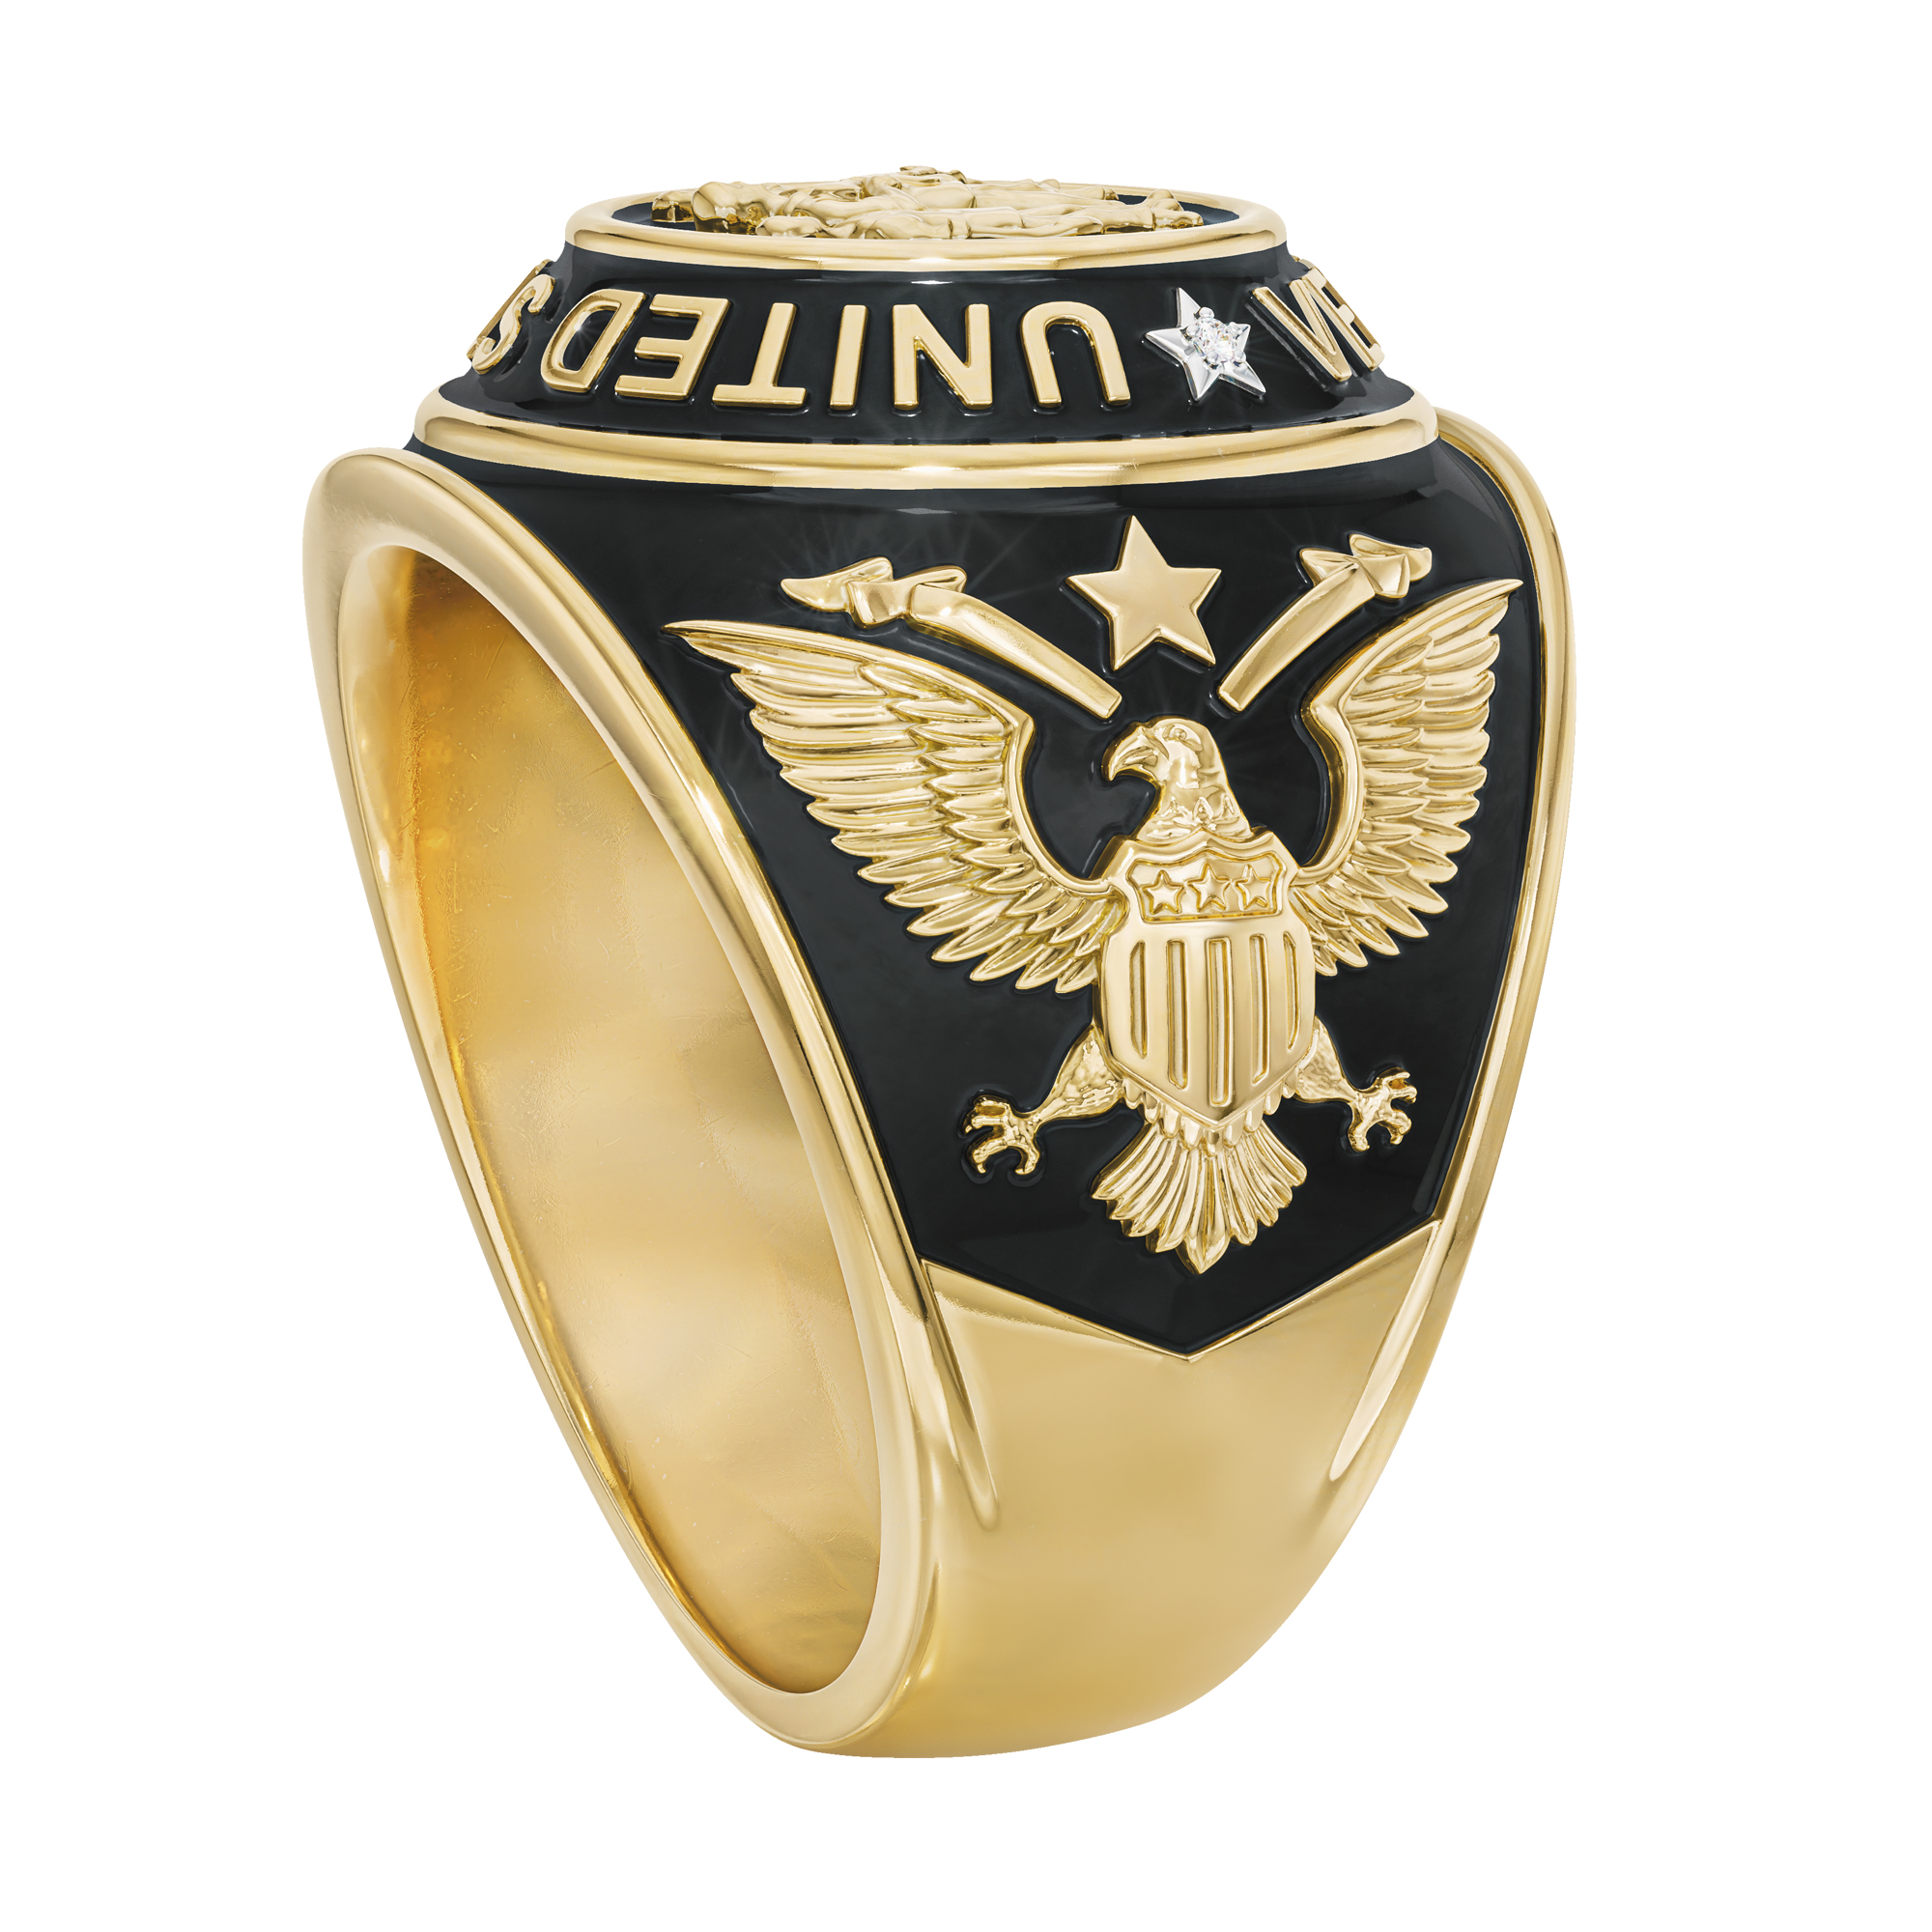 Military Veteran Ring 10419 0012 a main